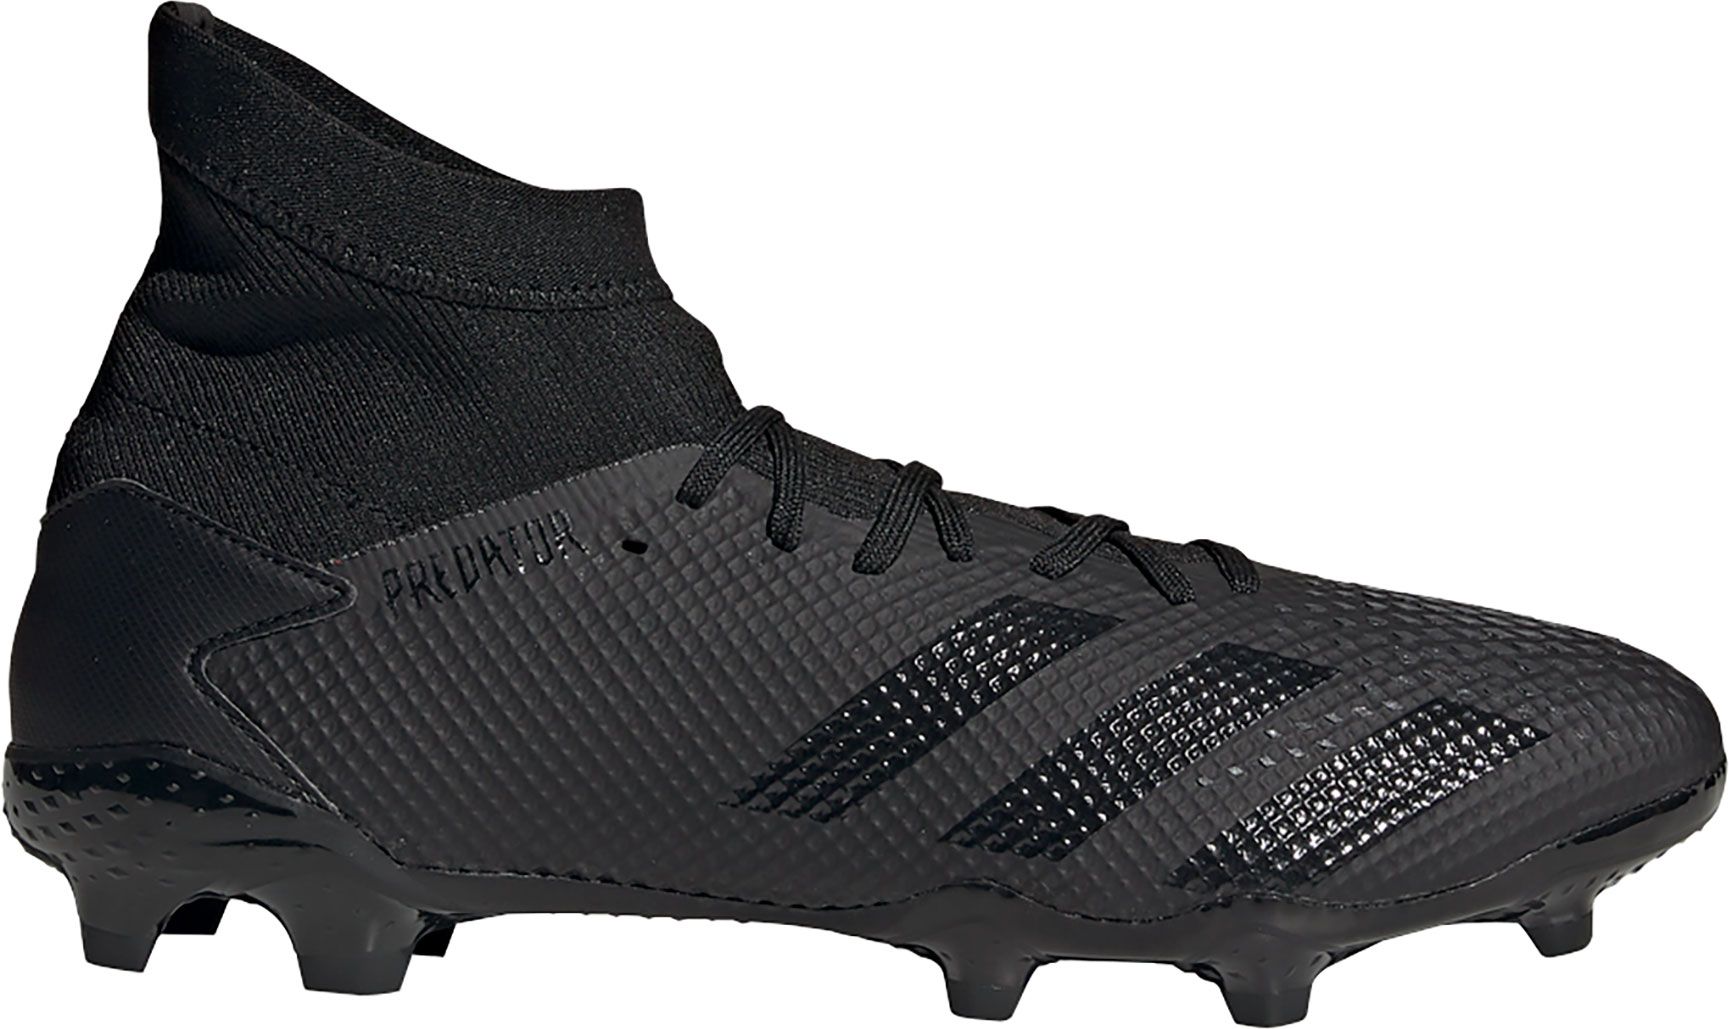 soccer boots adidas predator